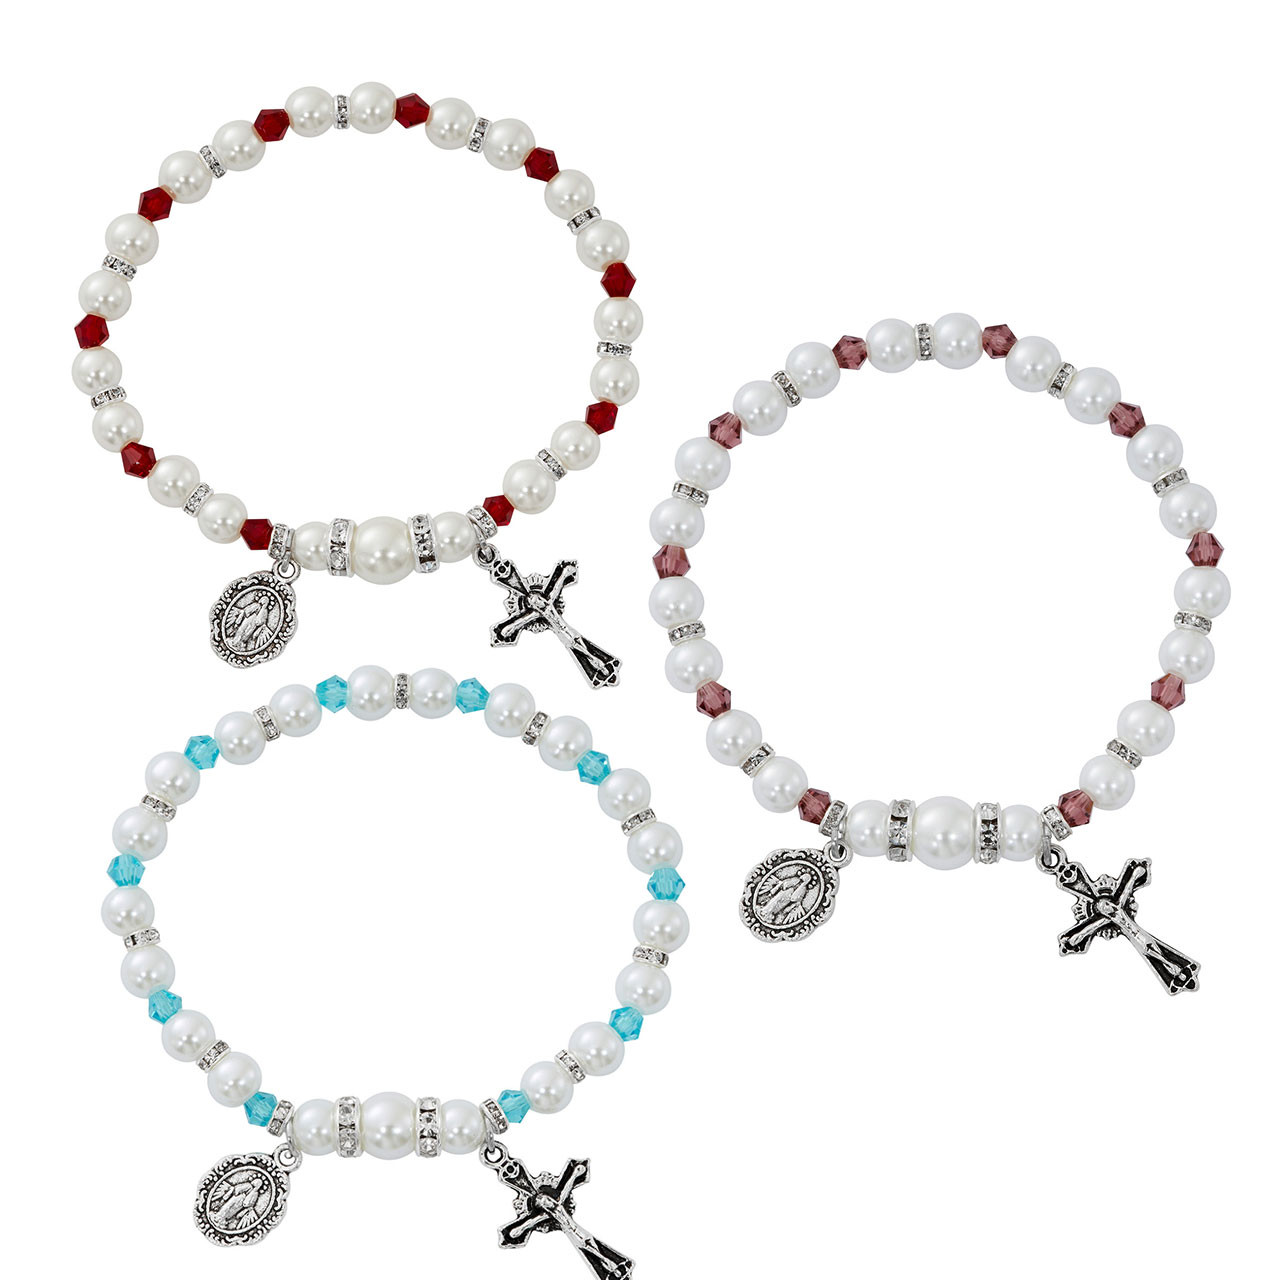 Birthstone Rosary Stretch Bracelets - Each Sold Separately